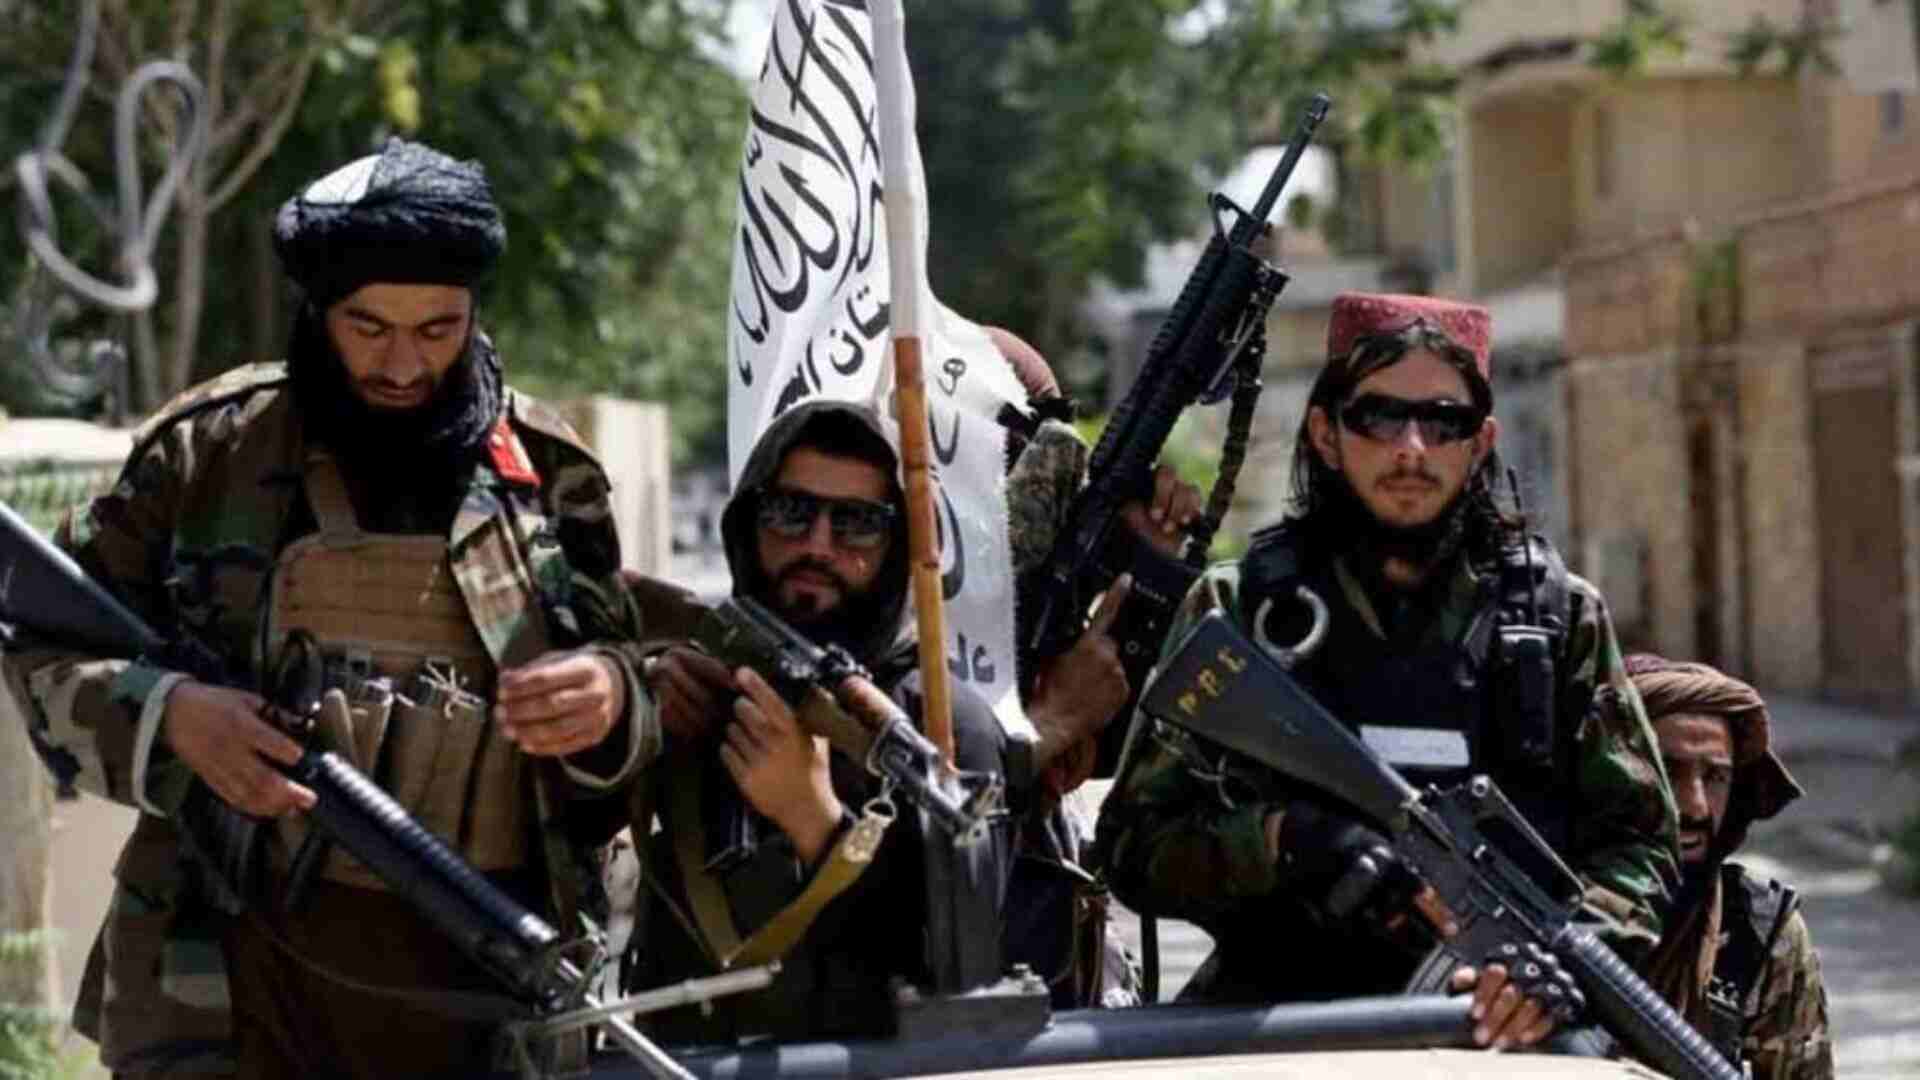 Pakistan Faces Terrorism Crisis, Echoes India’s Struggles